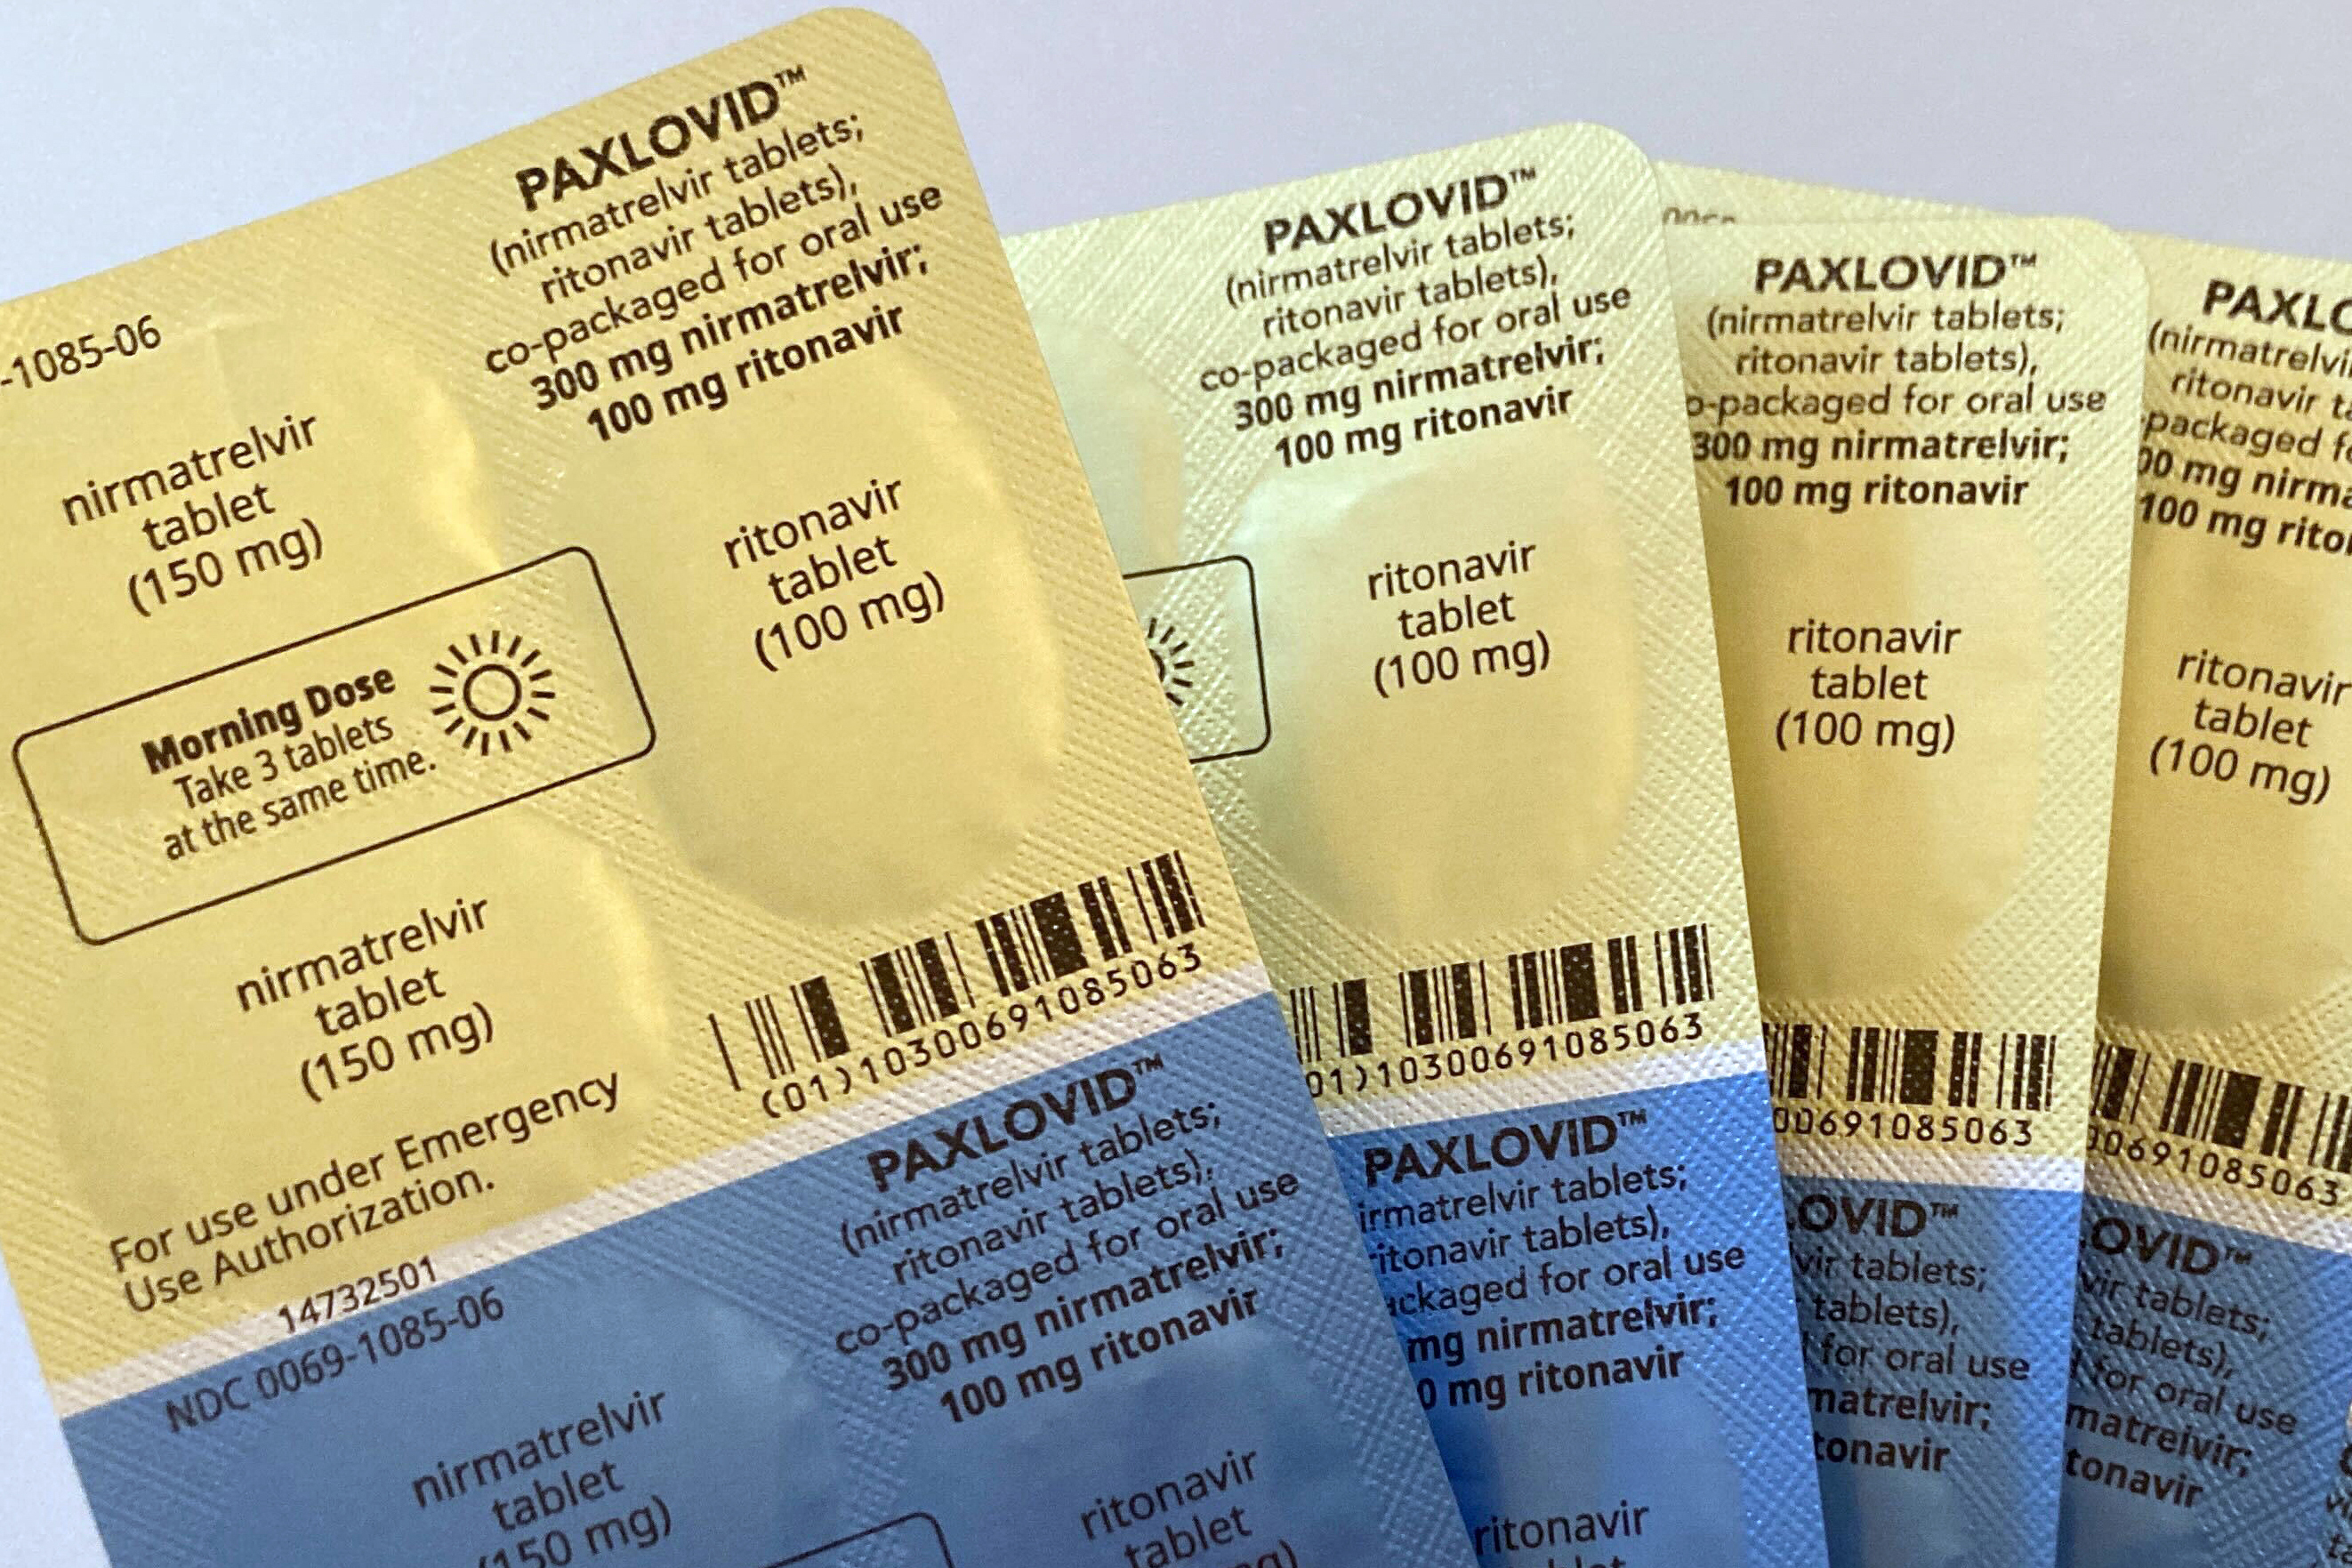 Paxlovid doses at a New York pharmacy (AP/Stephanie Nano, File)